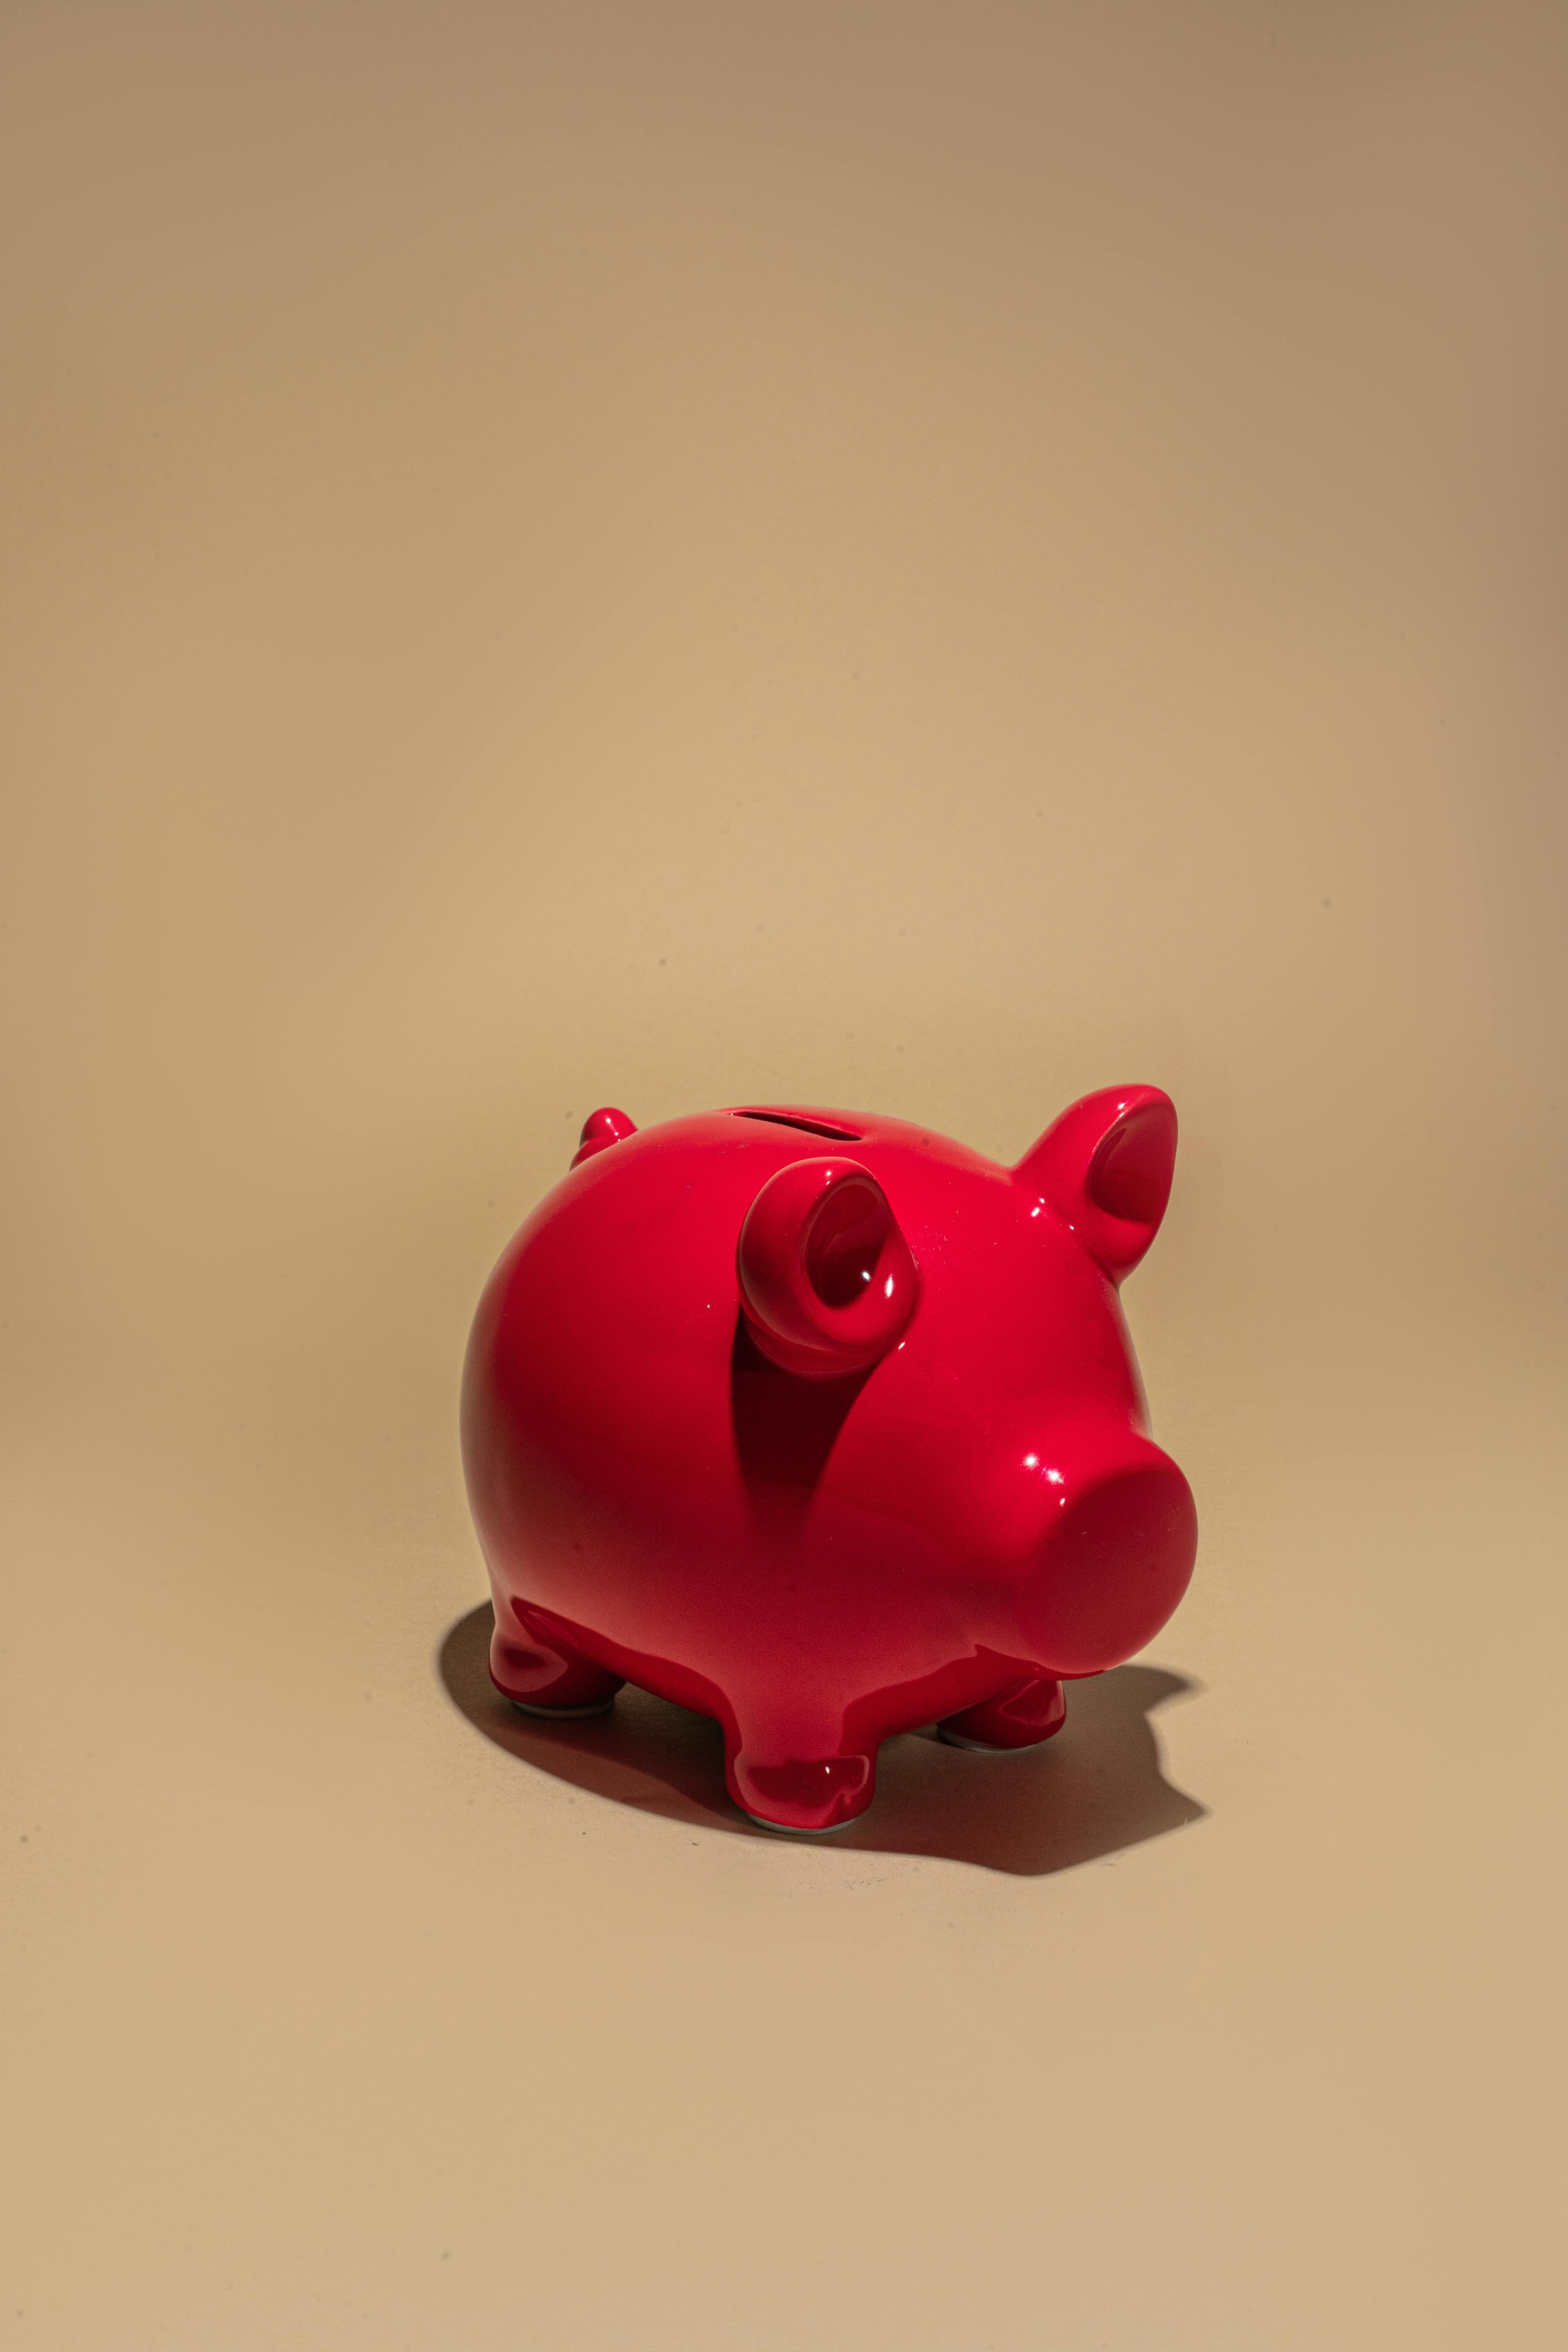 Piggy Bank Photos, Download The BEST Free Piggy Bank Stock Photos & HD  Images